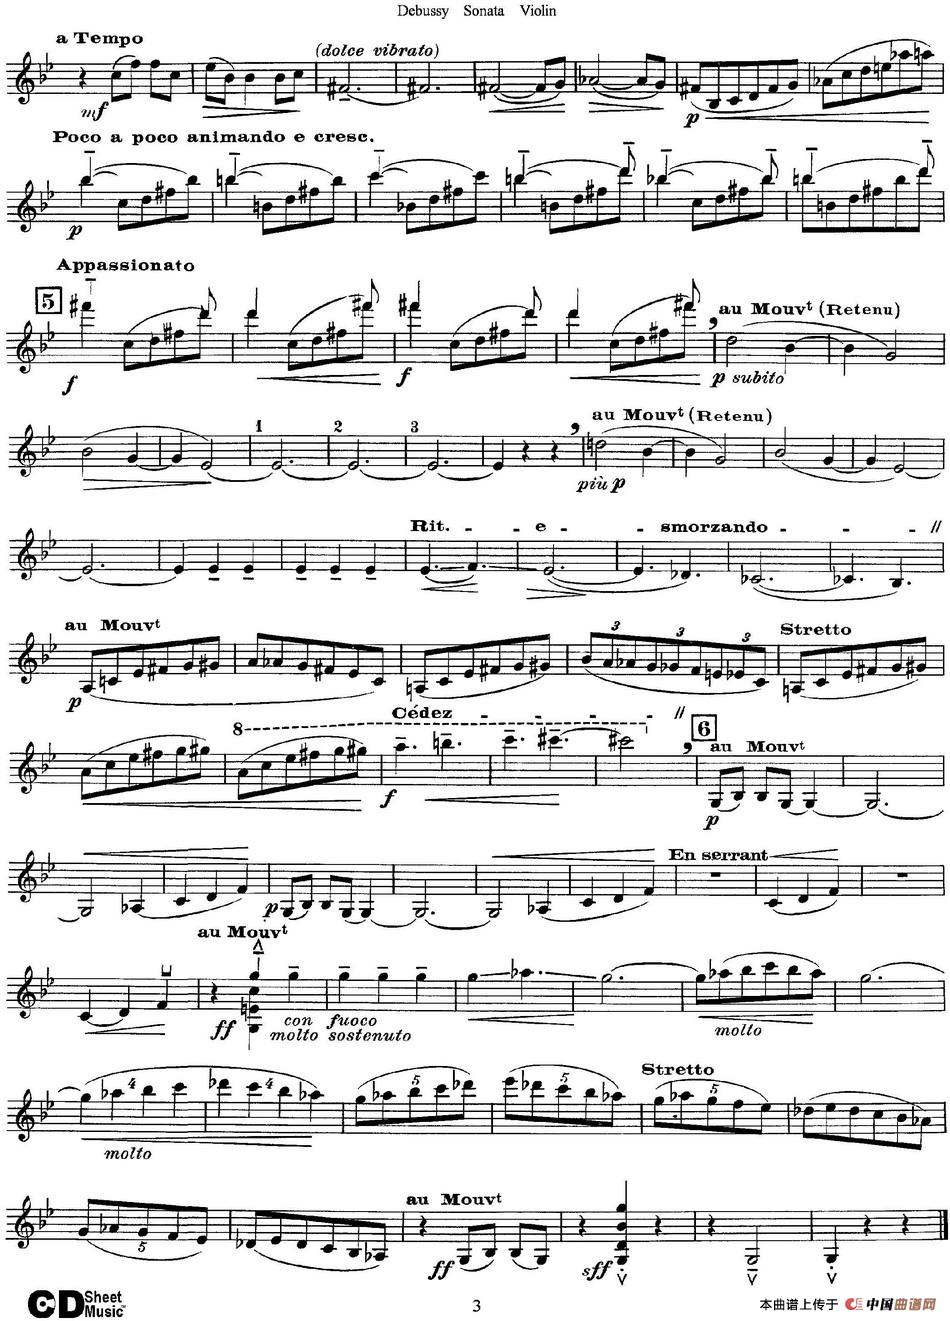 Debussy Sonata